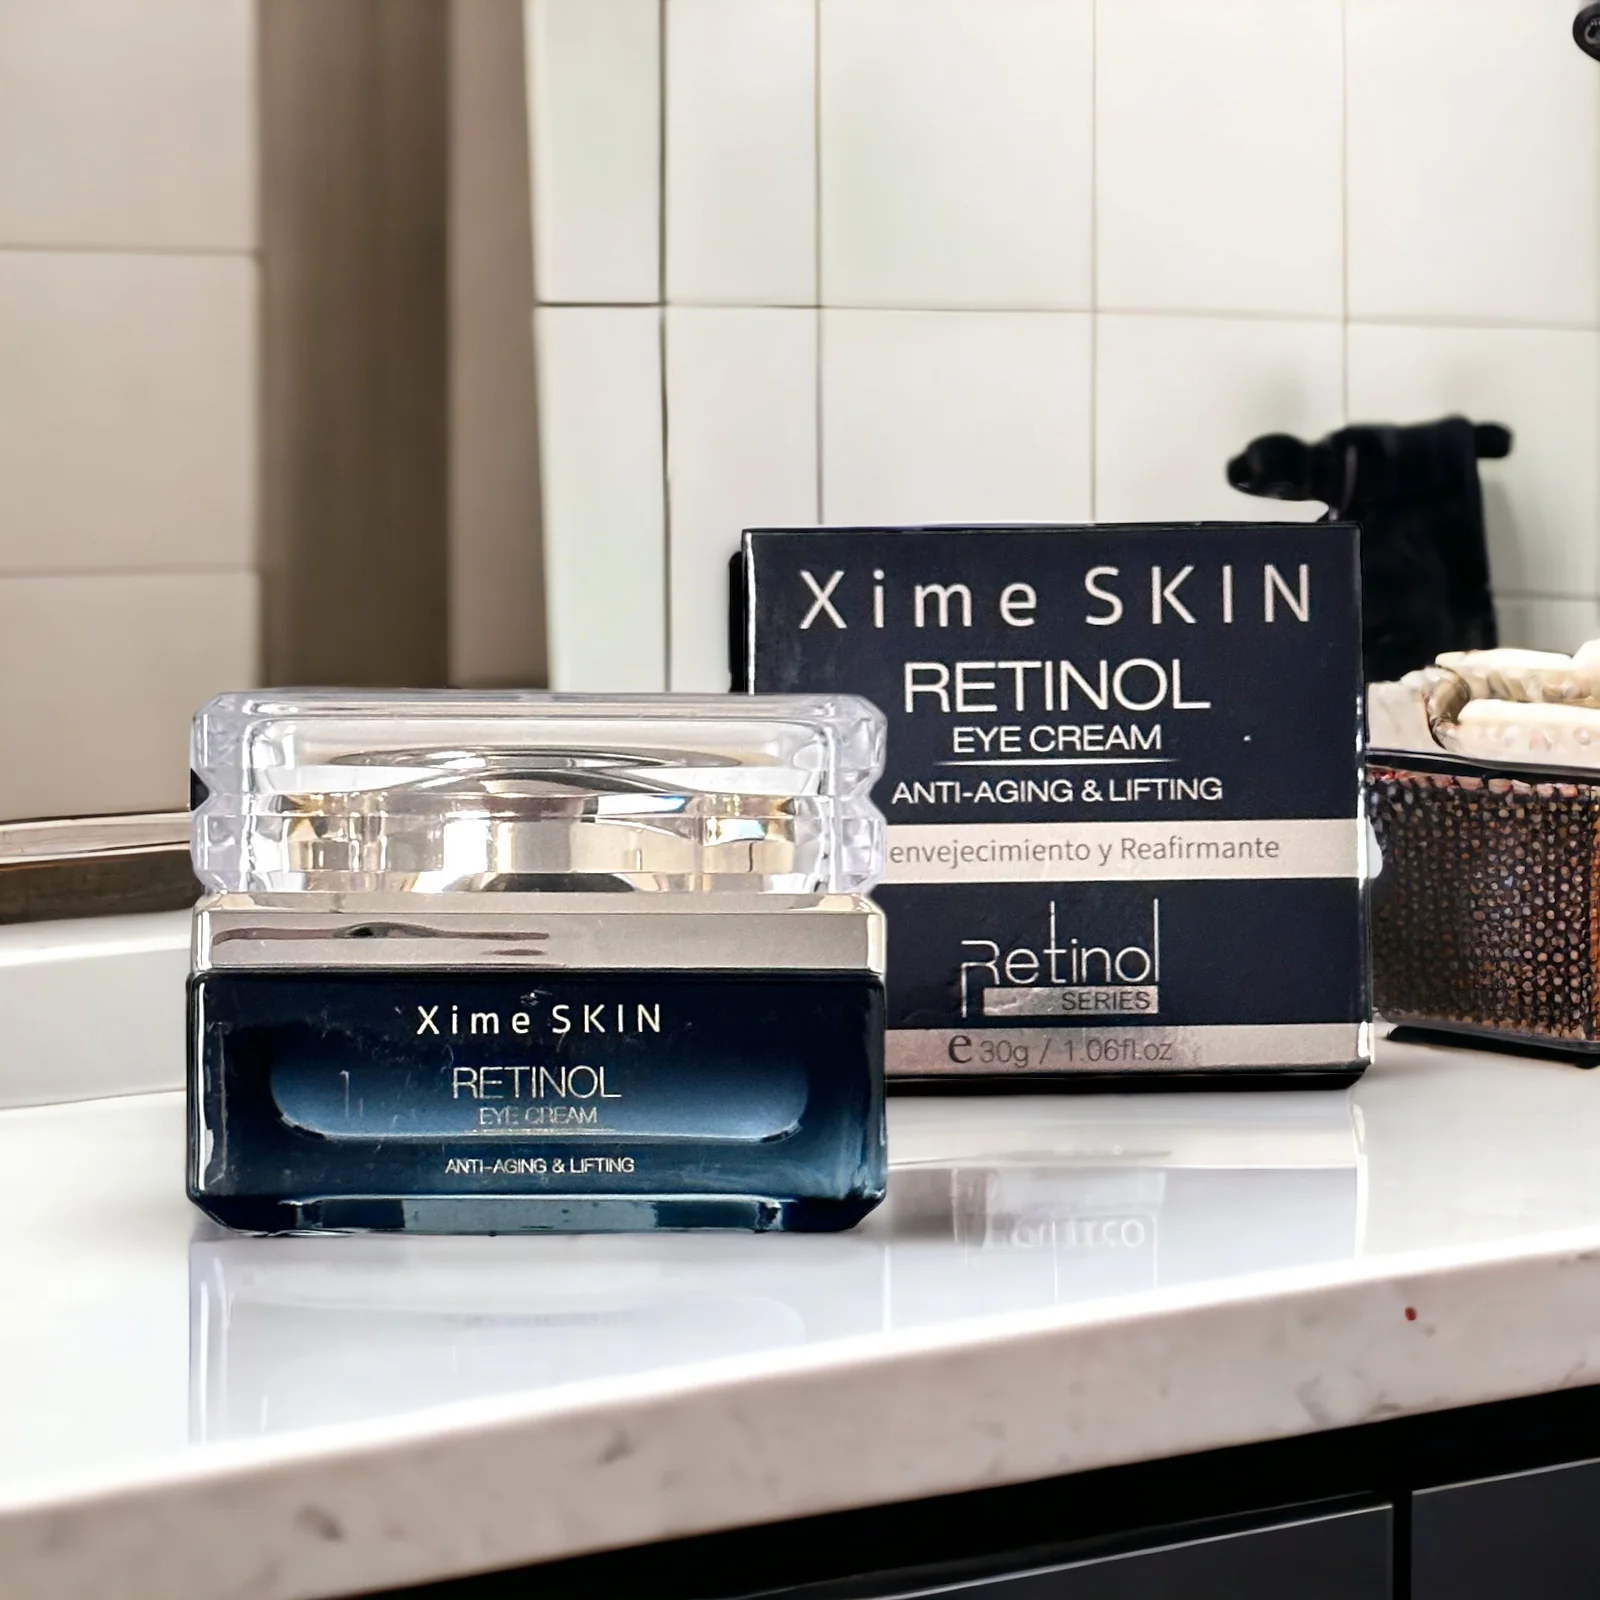 Xime Skin Anti-Aging & Lifting Retinol Eye Cream (30g / 1.06fl oz)